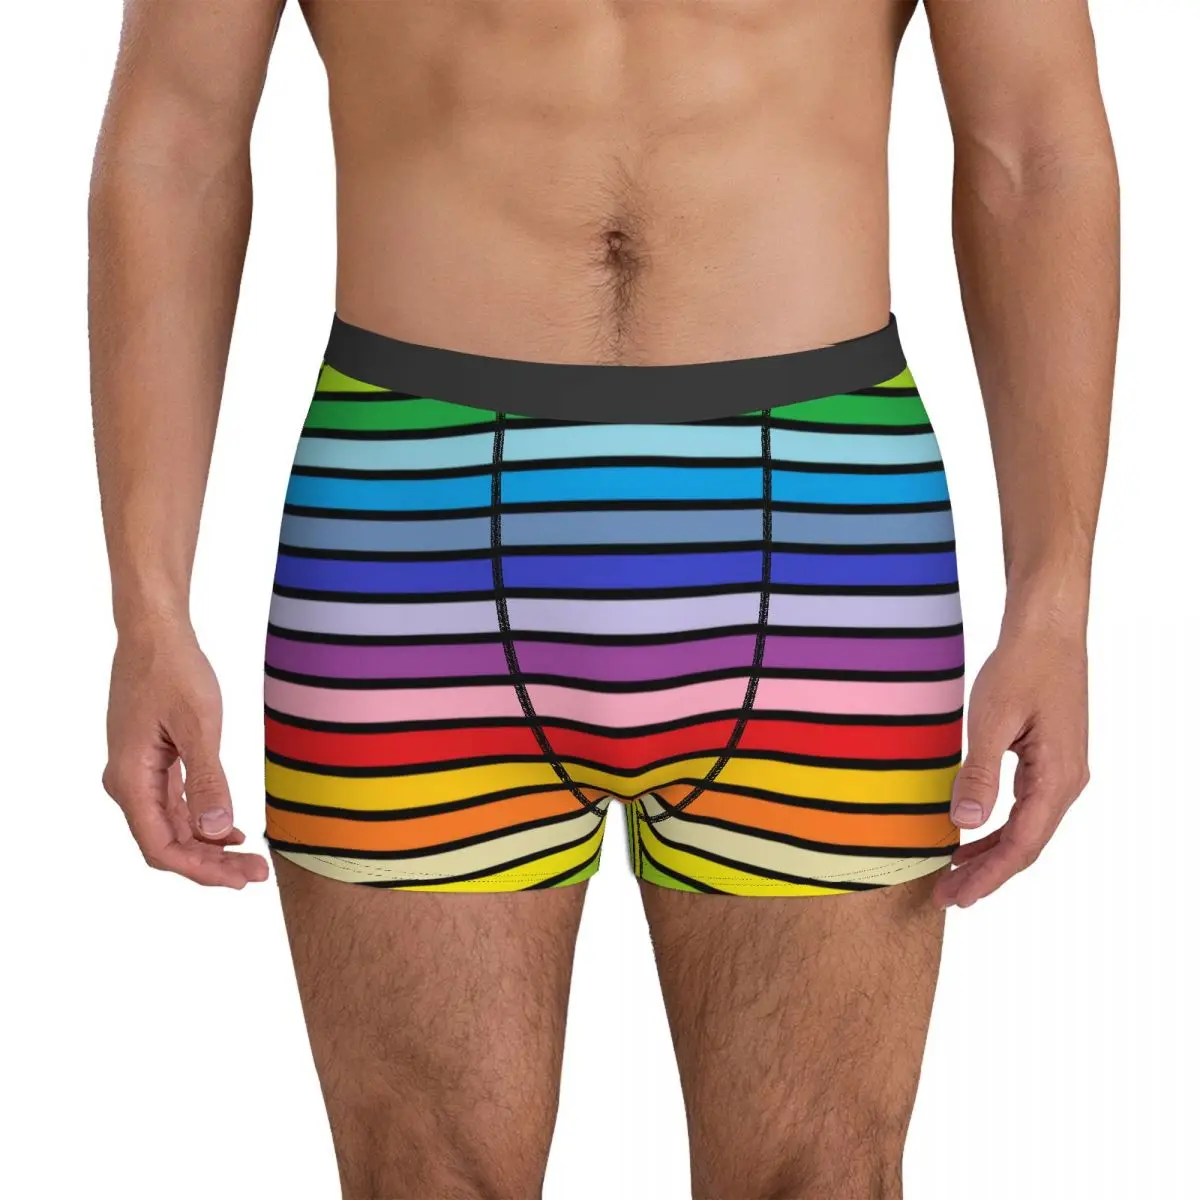 Rainbow Stripes Underwear Black Outlined Broader Spectrum Printing Boxershorts Hot Men's Underpants Stretch Shorts Briefs Gift